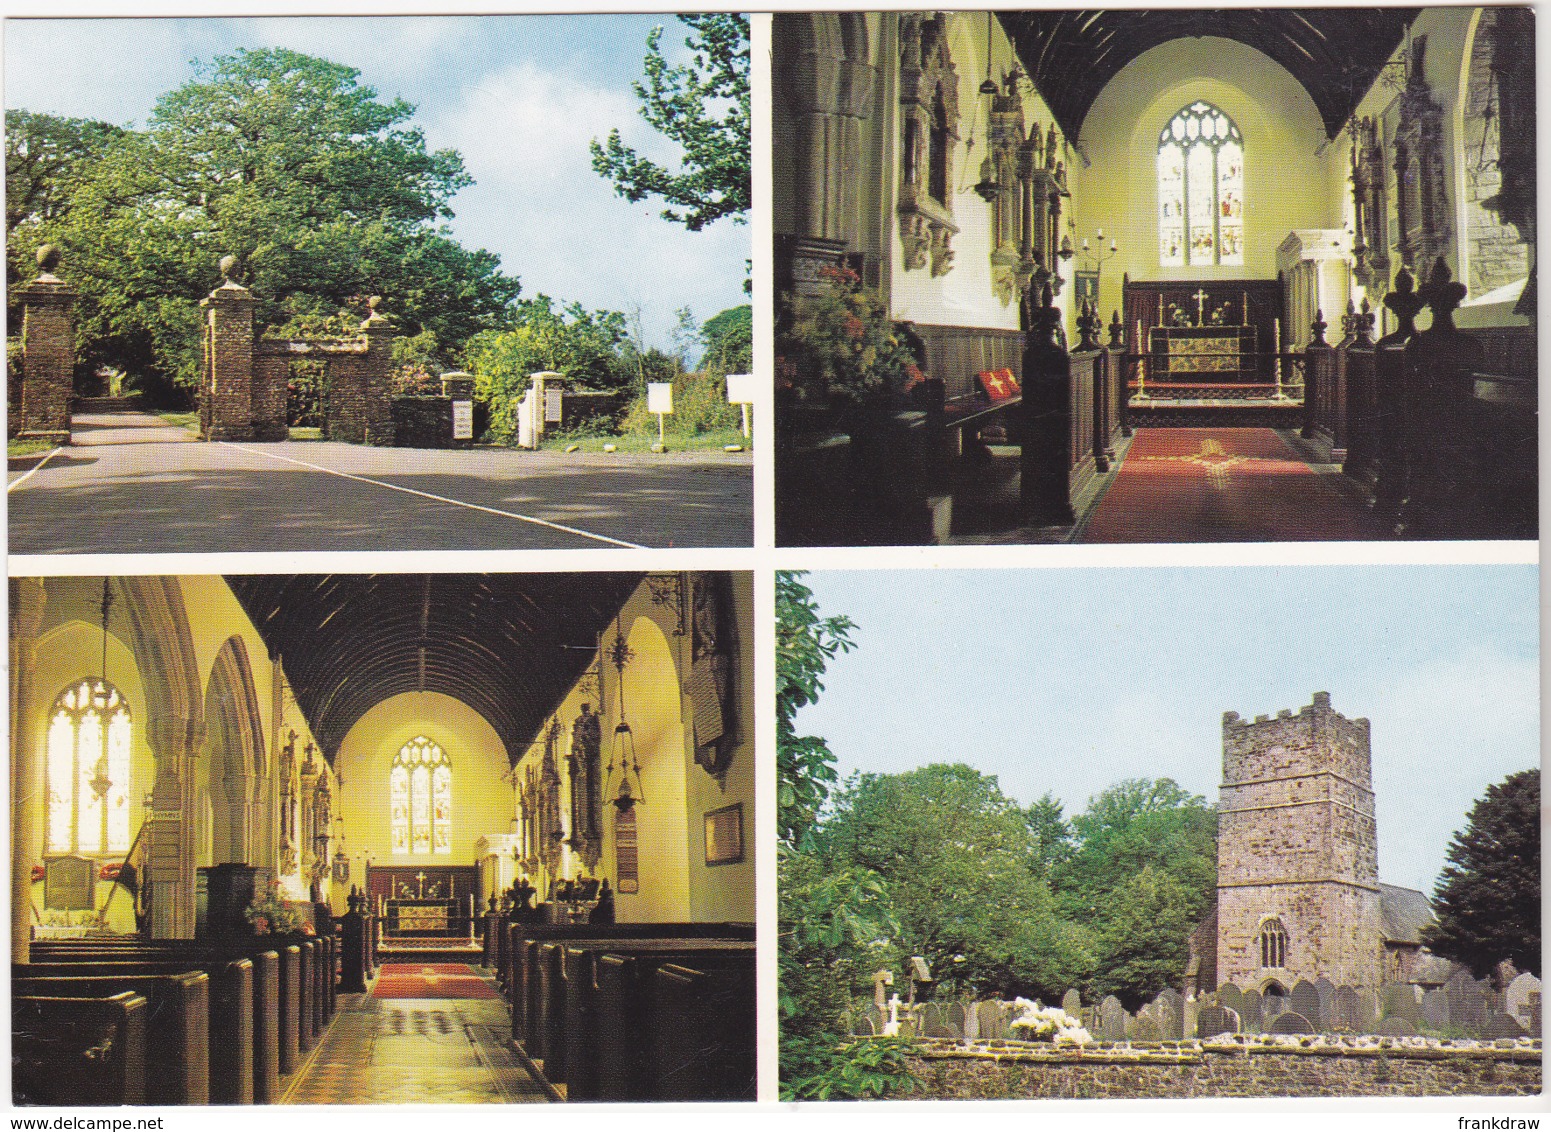 Postcard - All Saints Church, Clovelly, North Devon - 4 Views - VG - Unclassified